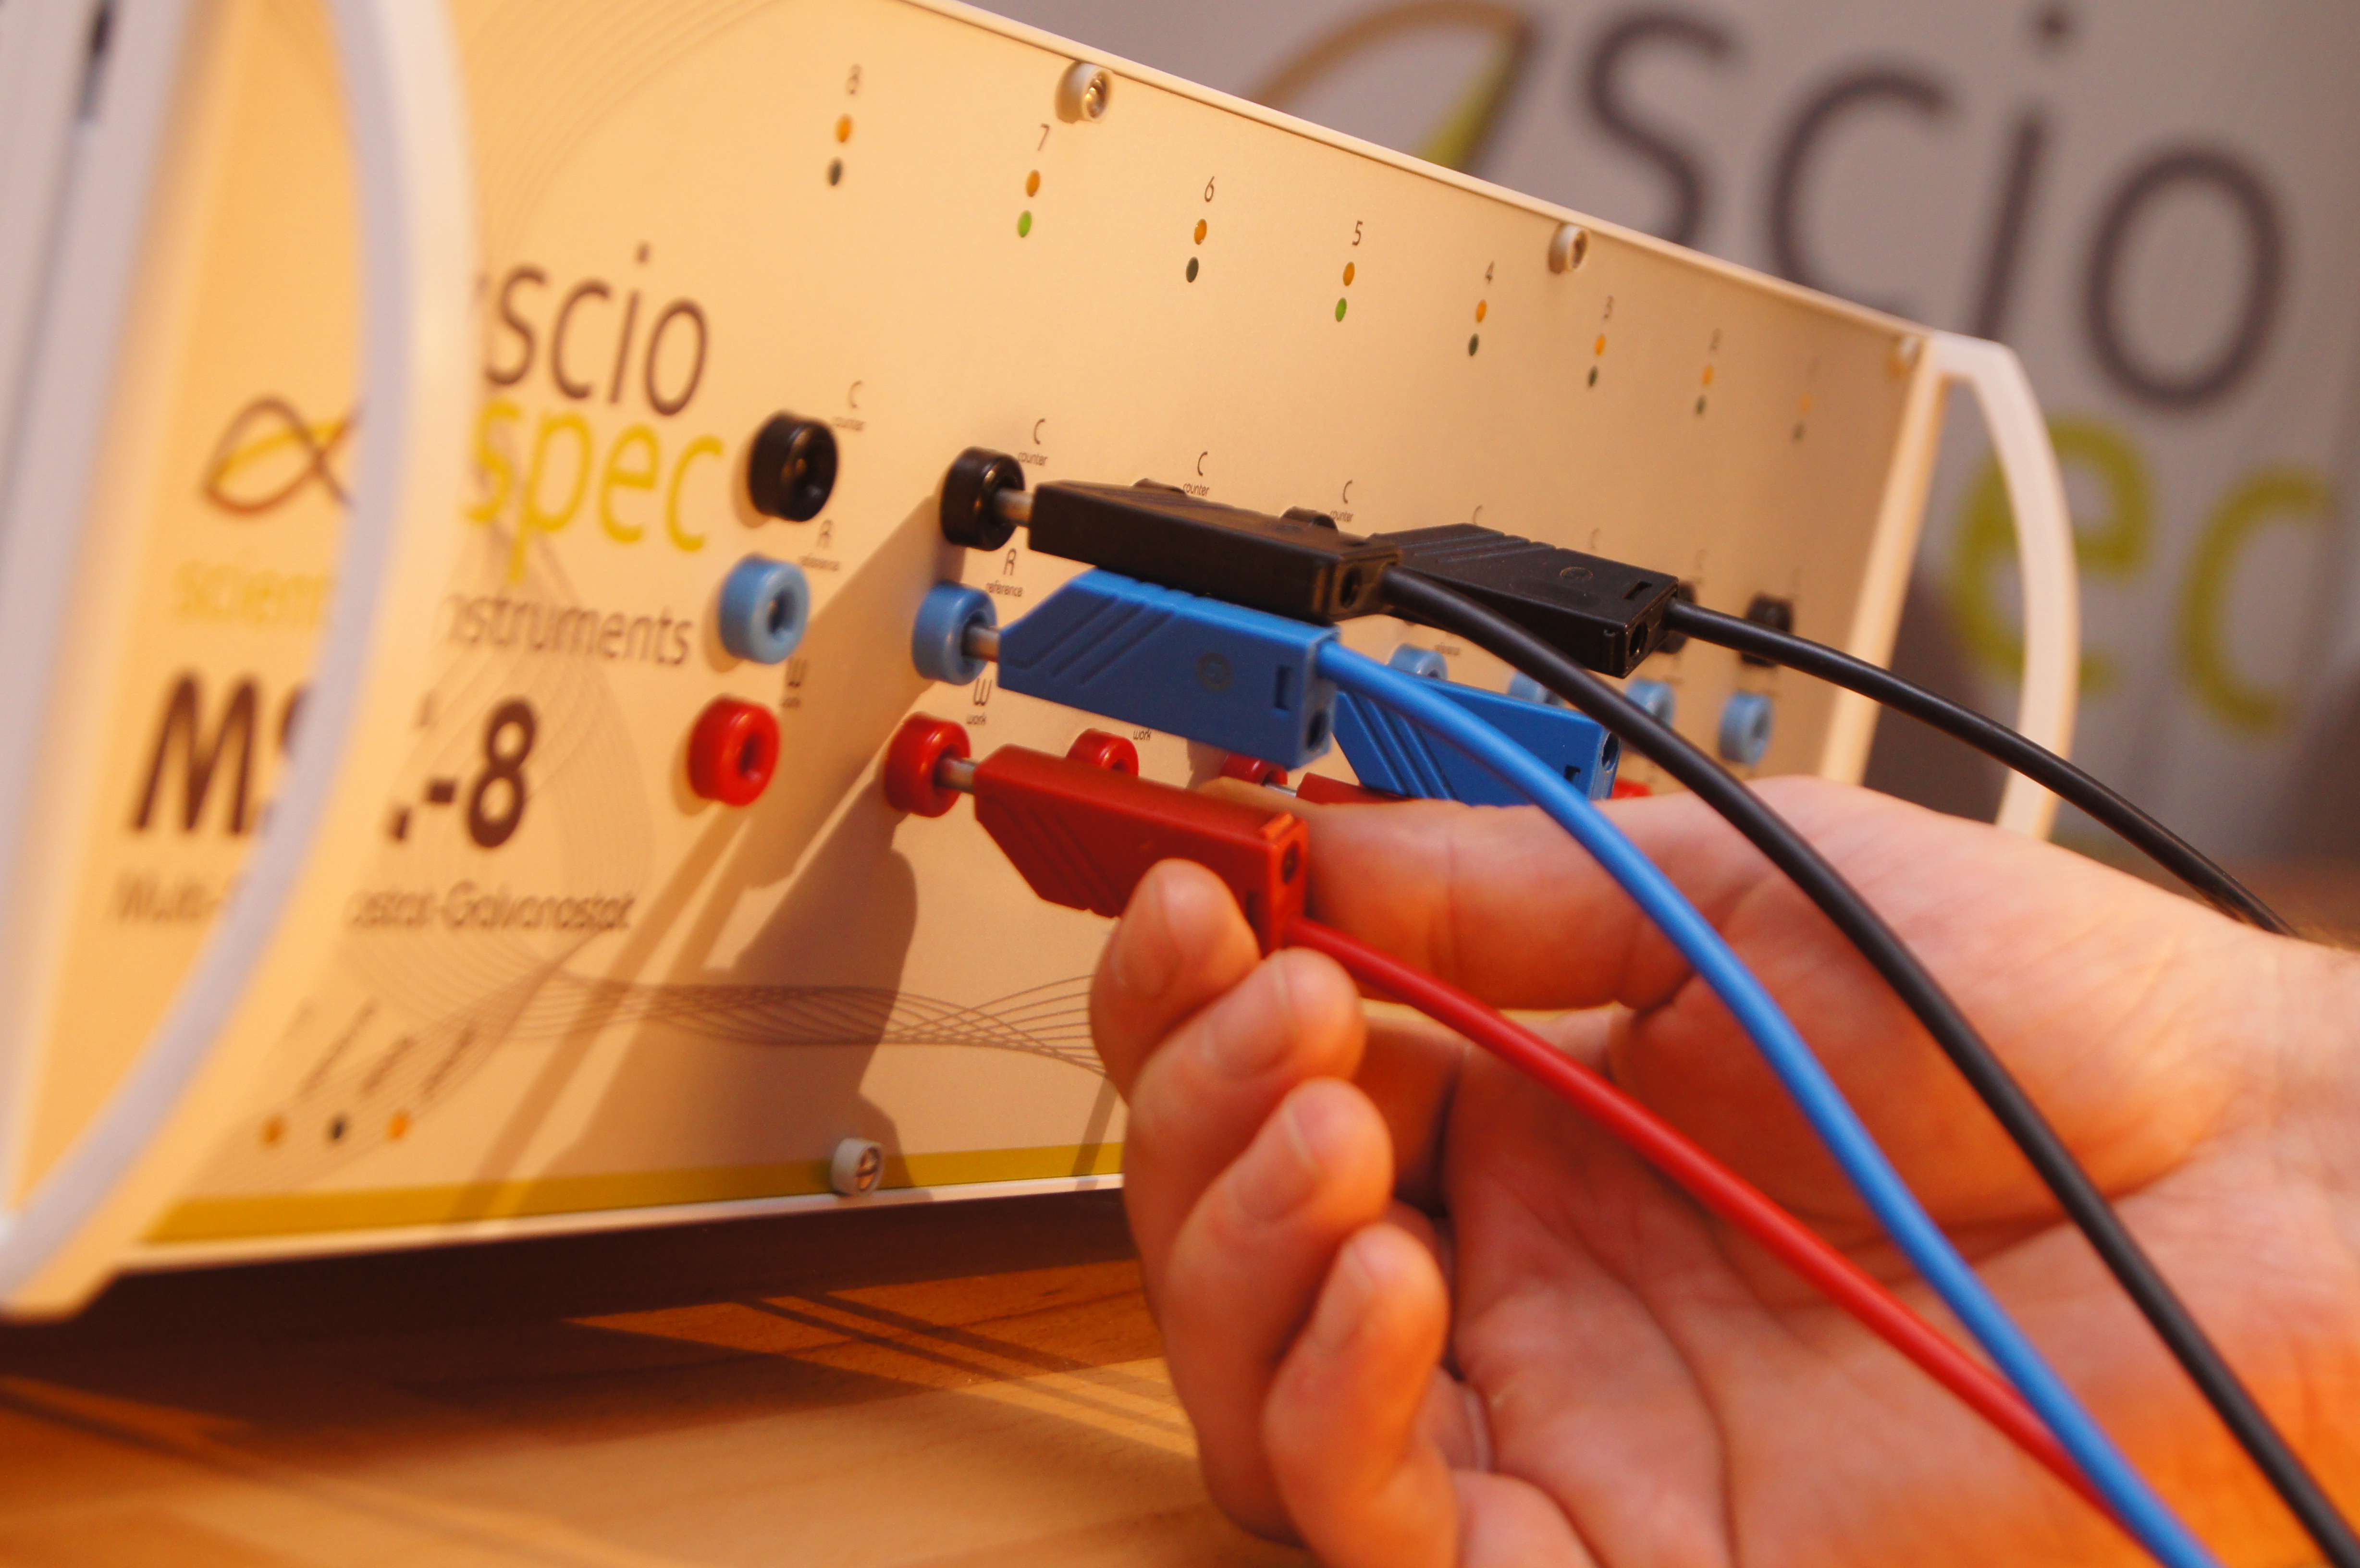 Impedance Spectroscopy & Impedance Meters